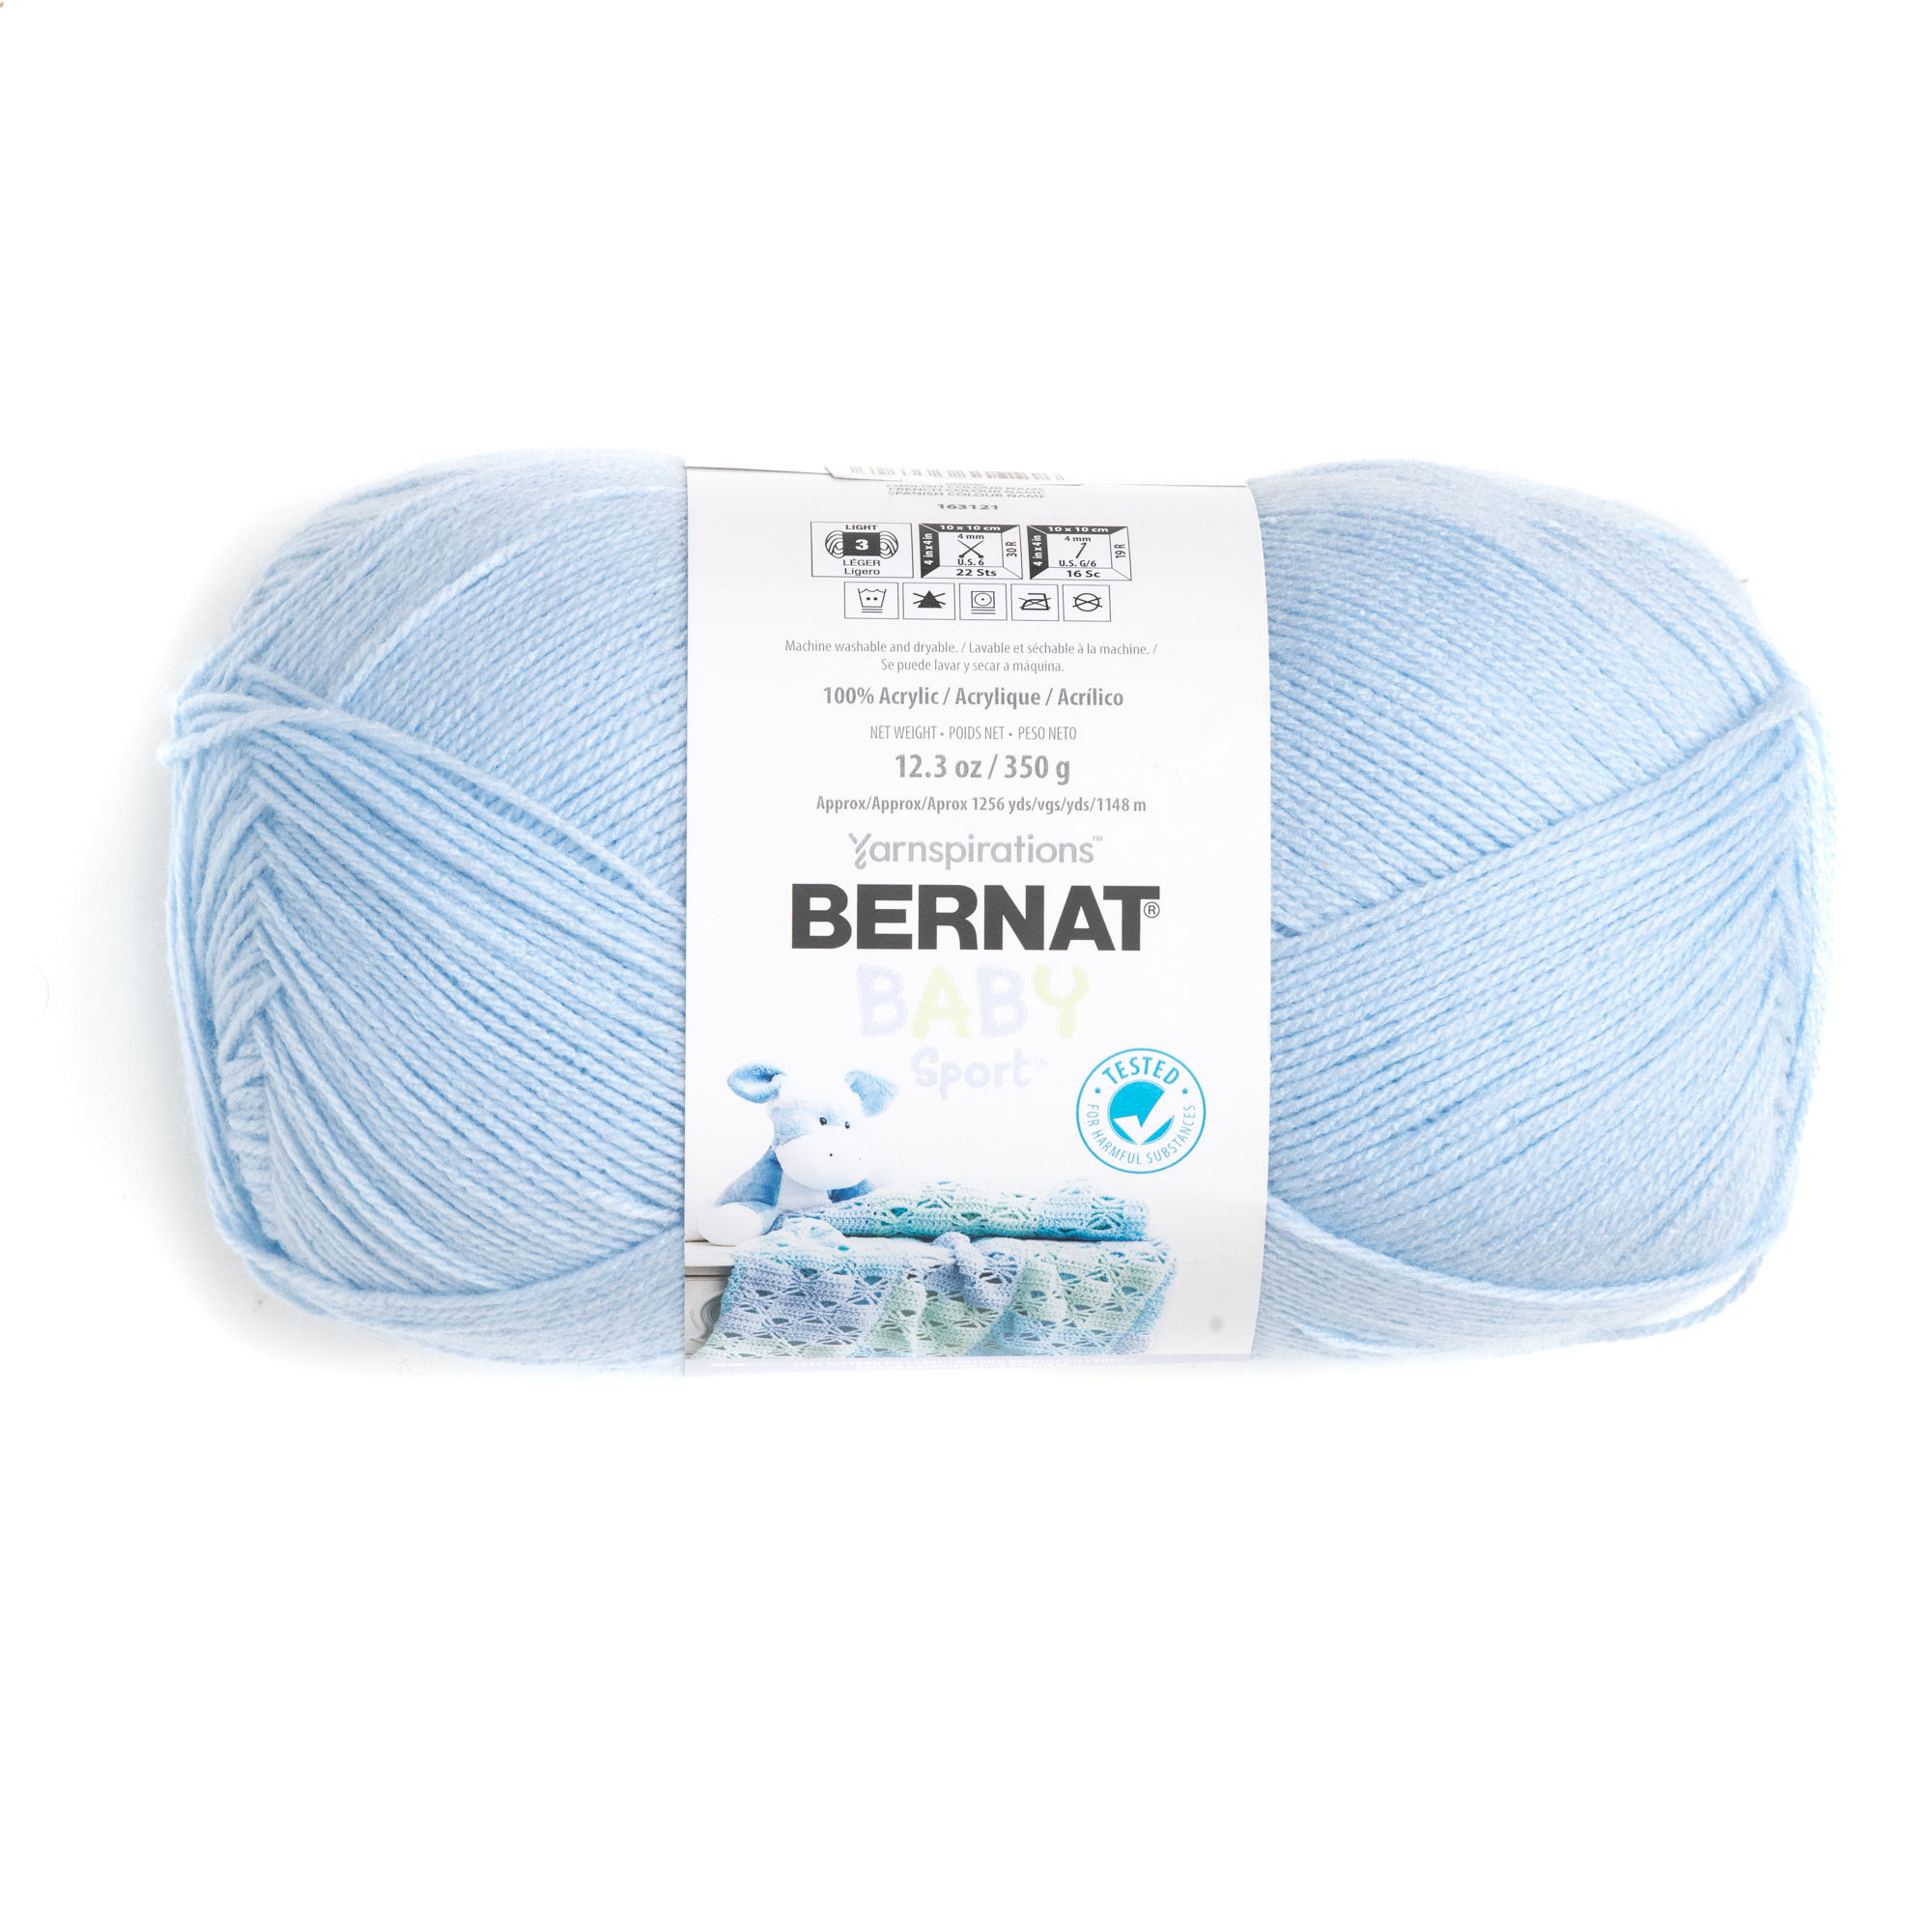 Bernat Baby Sport Yarn, Baby Blue, 12.3oz(350g), Light, Acrylic - image 1 of 5